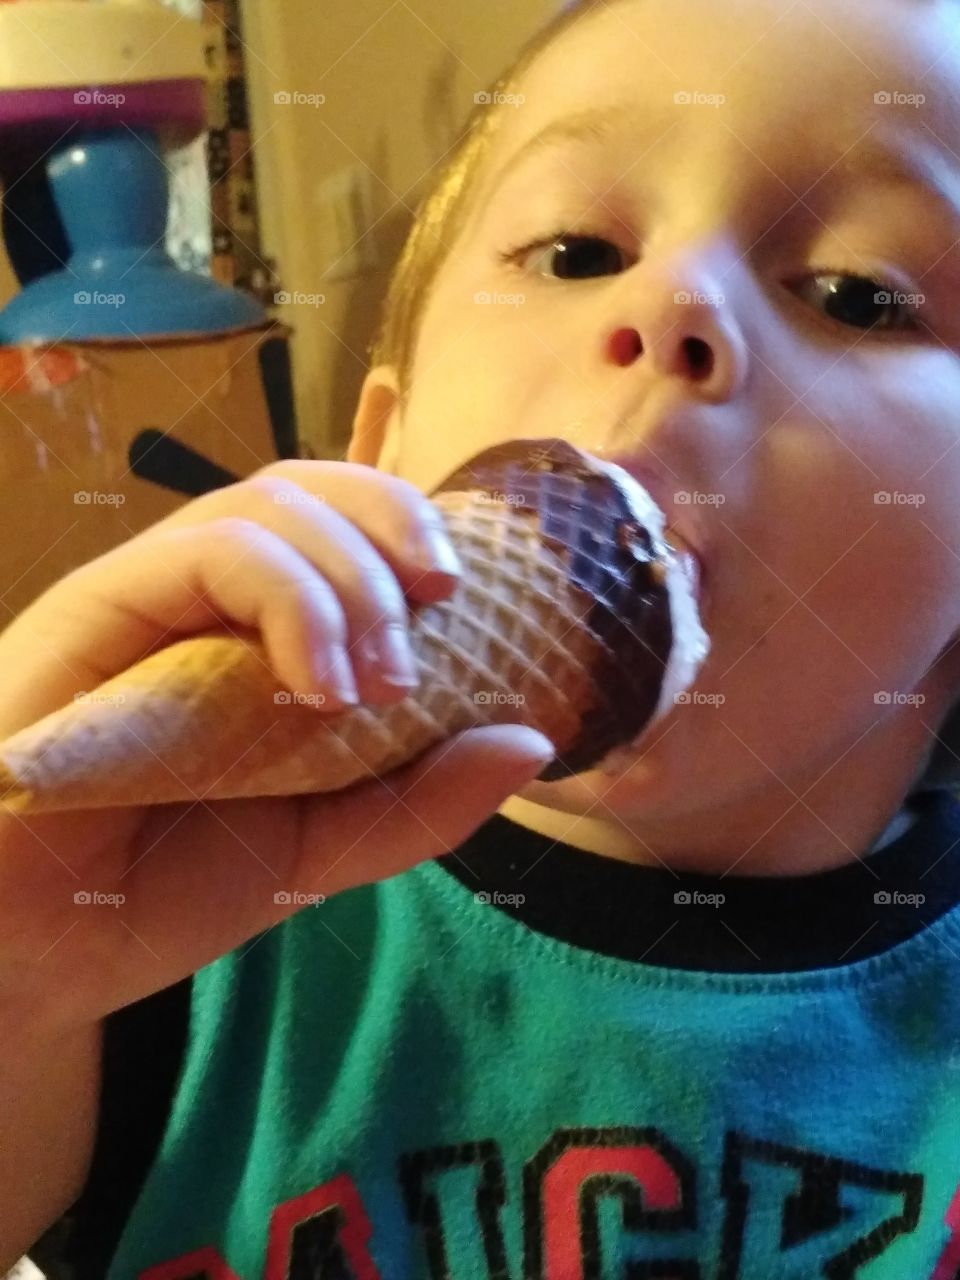 My Grandsons first ice cream cone.